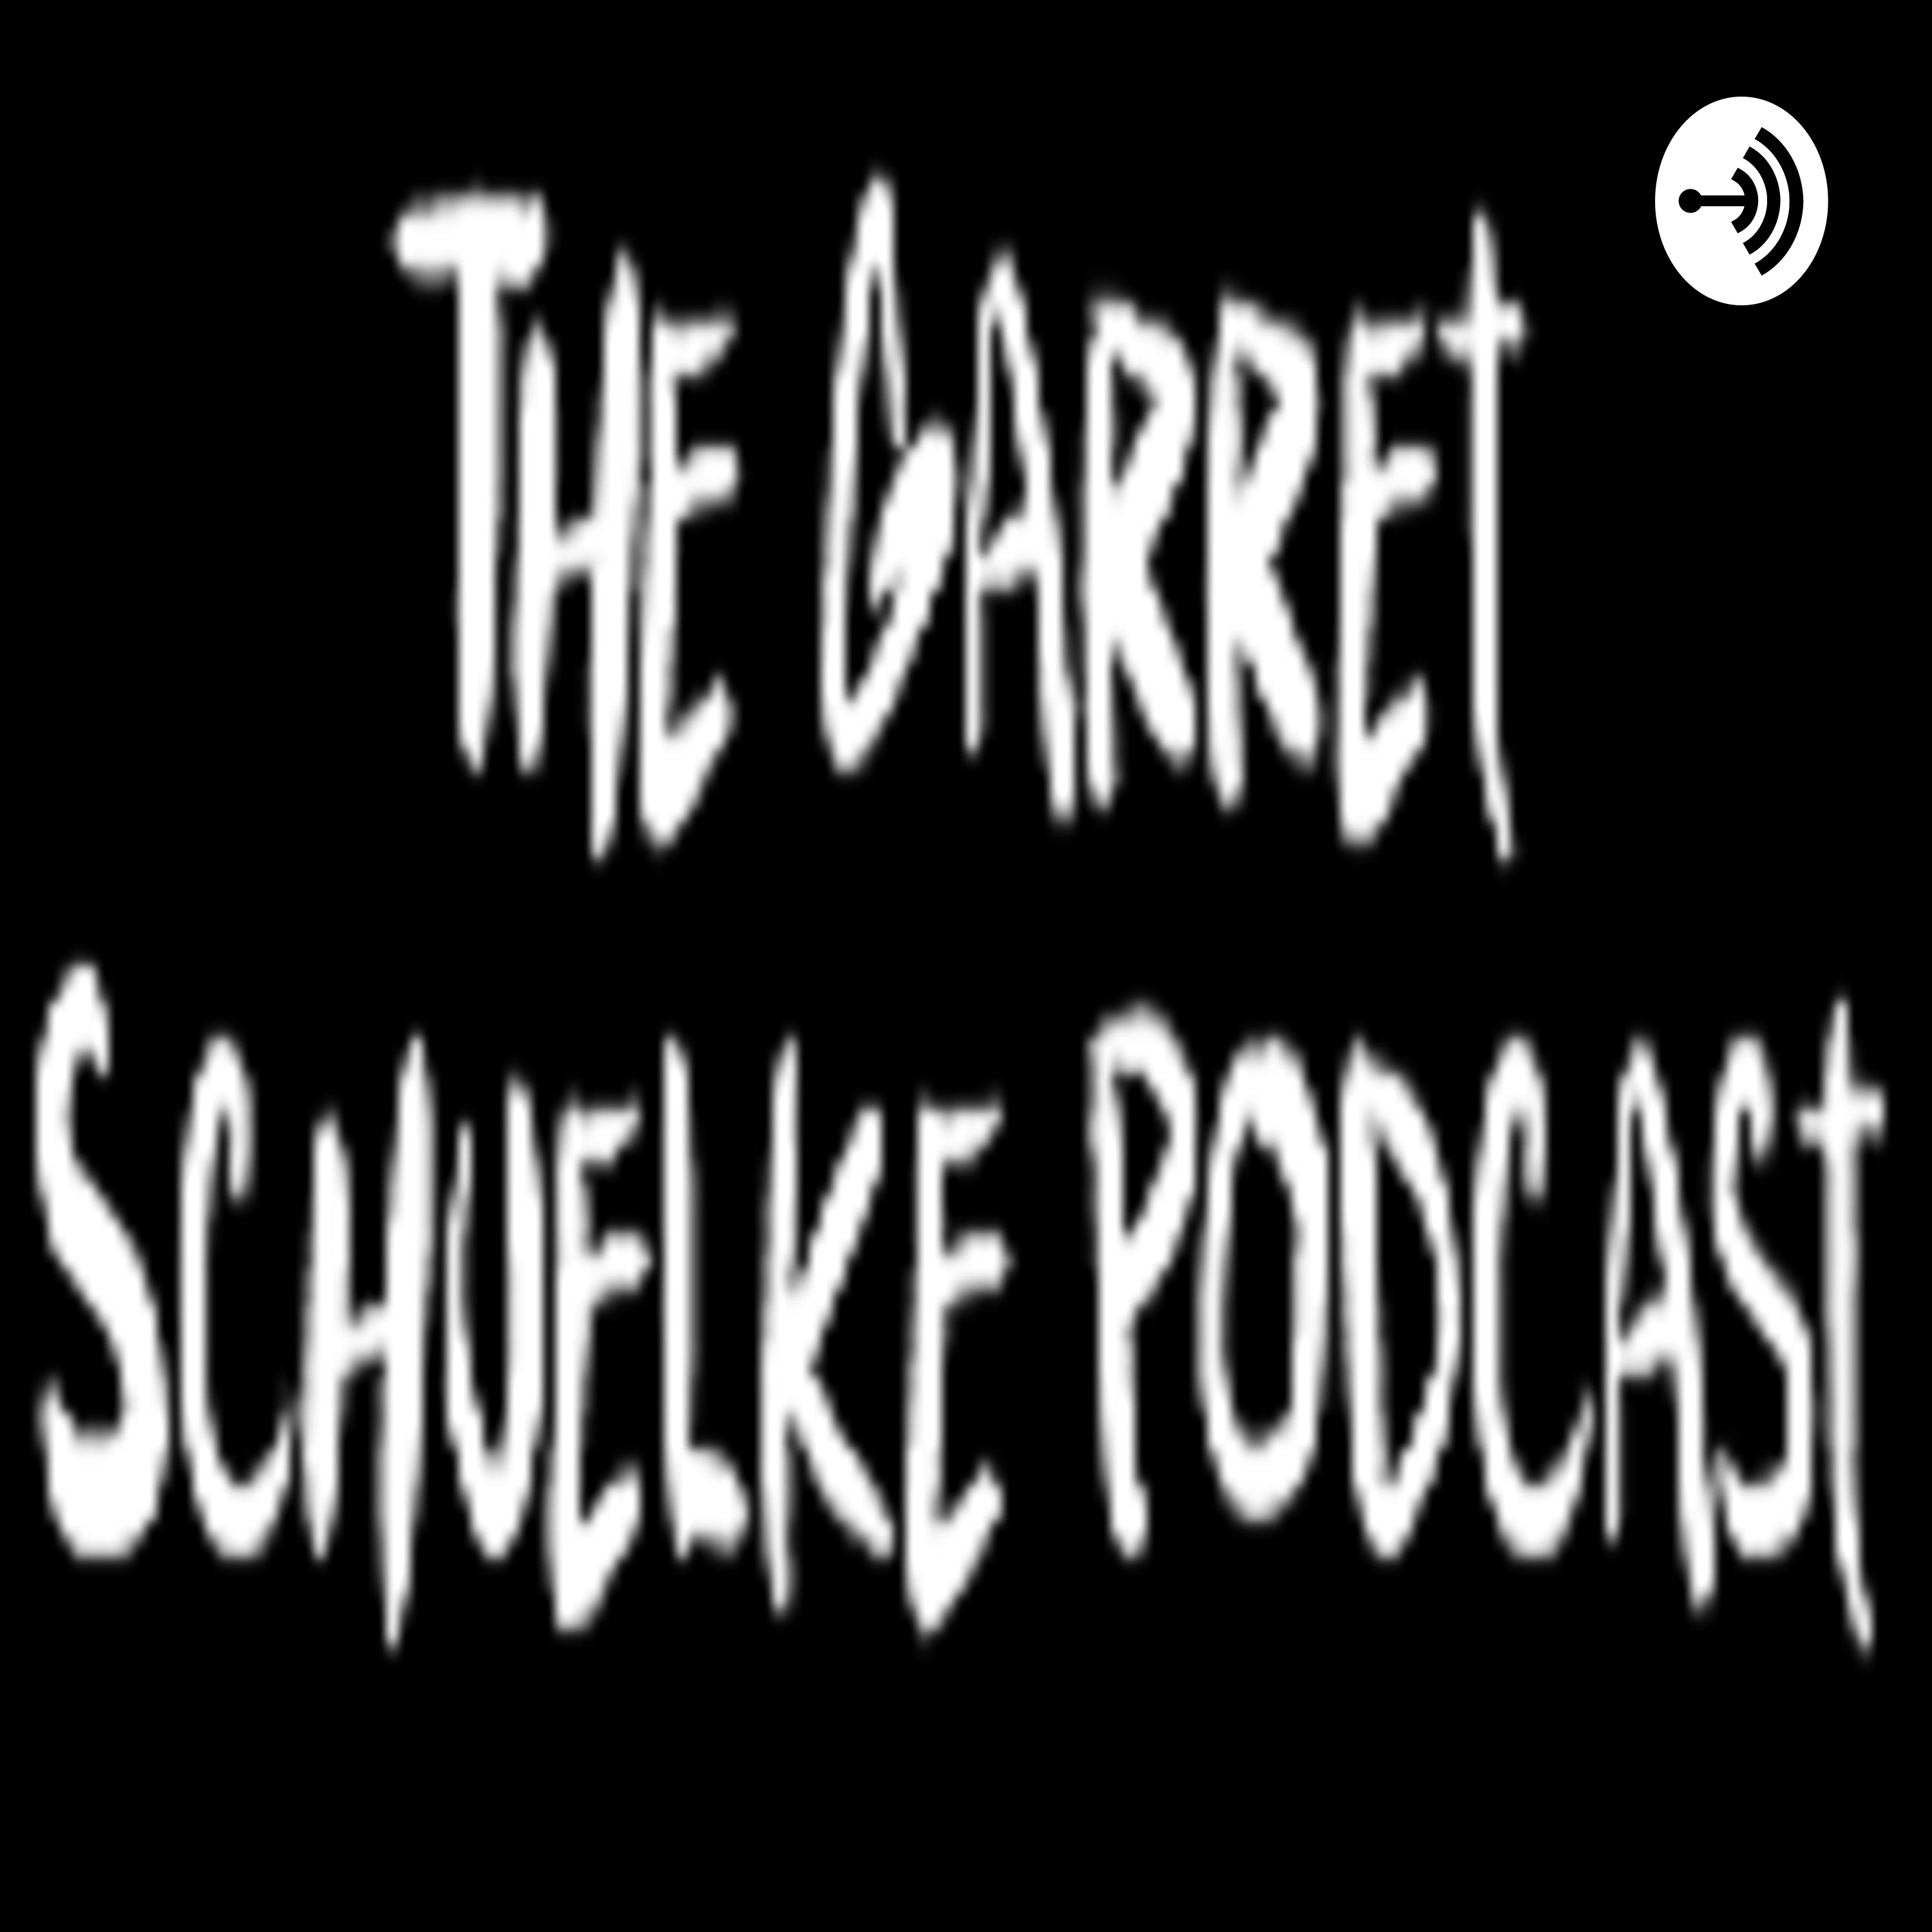 The Garret Schuelke Podcast Episode 51: It Feels Really Good to Do It with Joe Bielecki